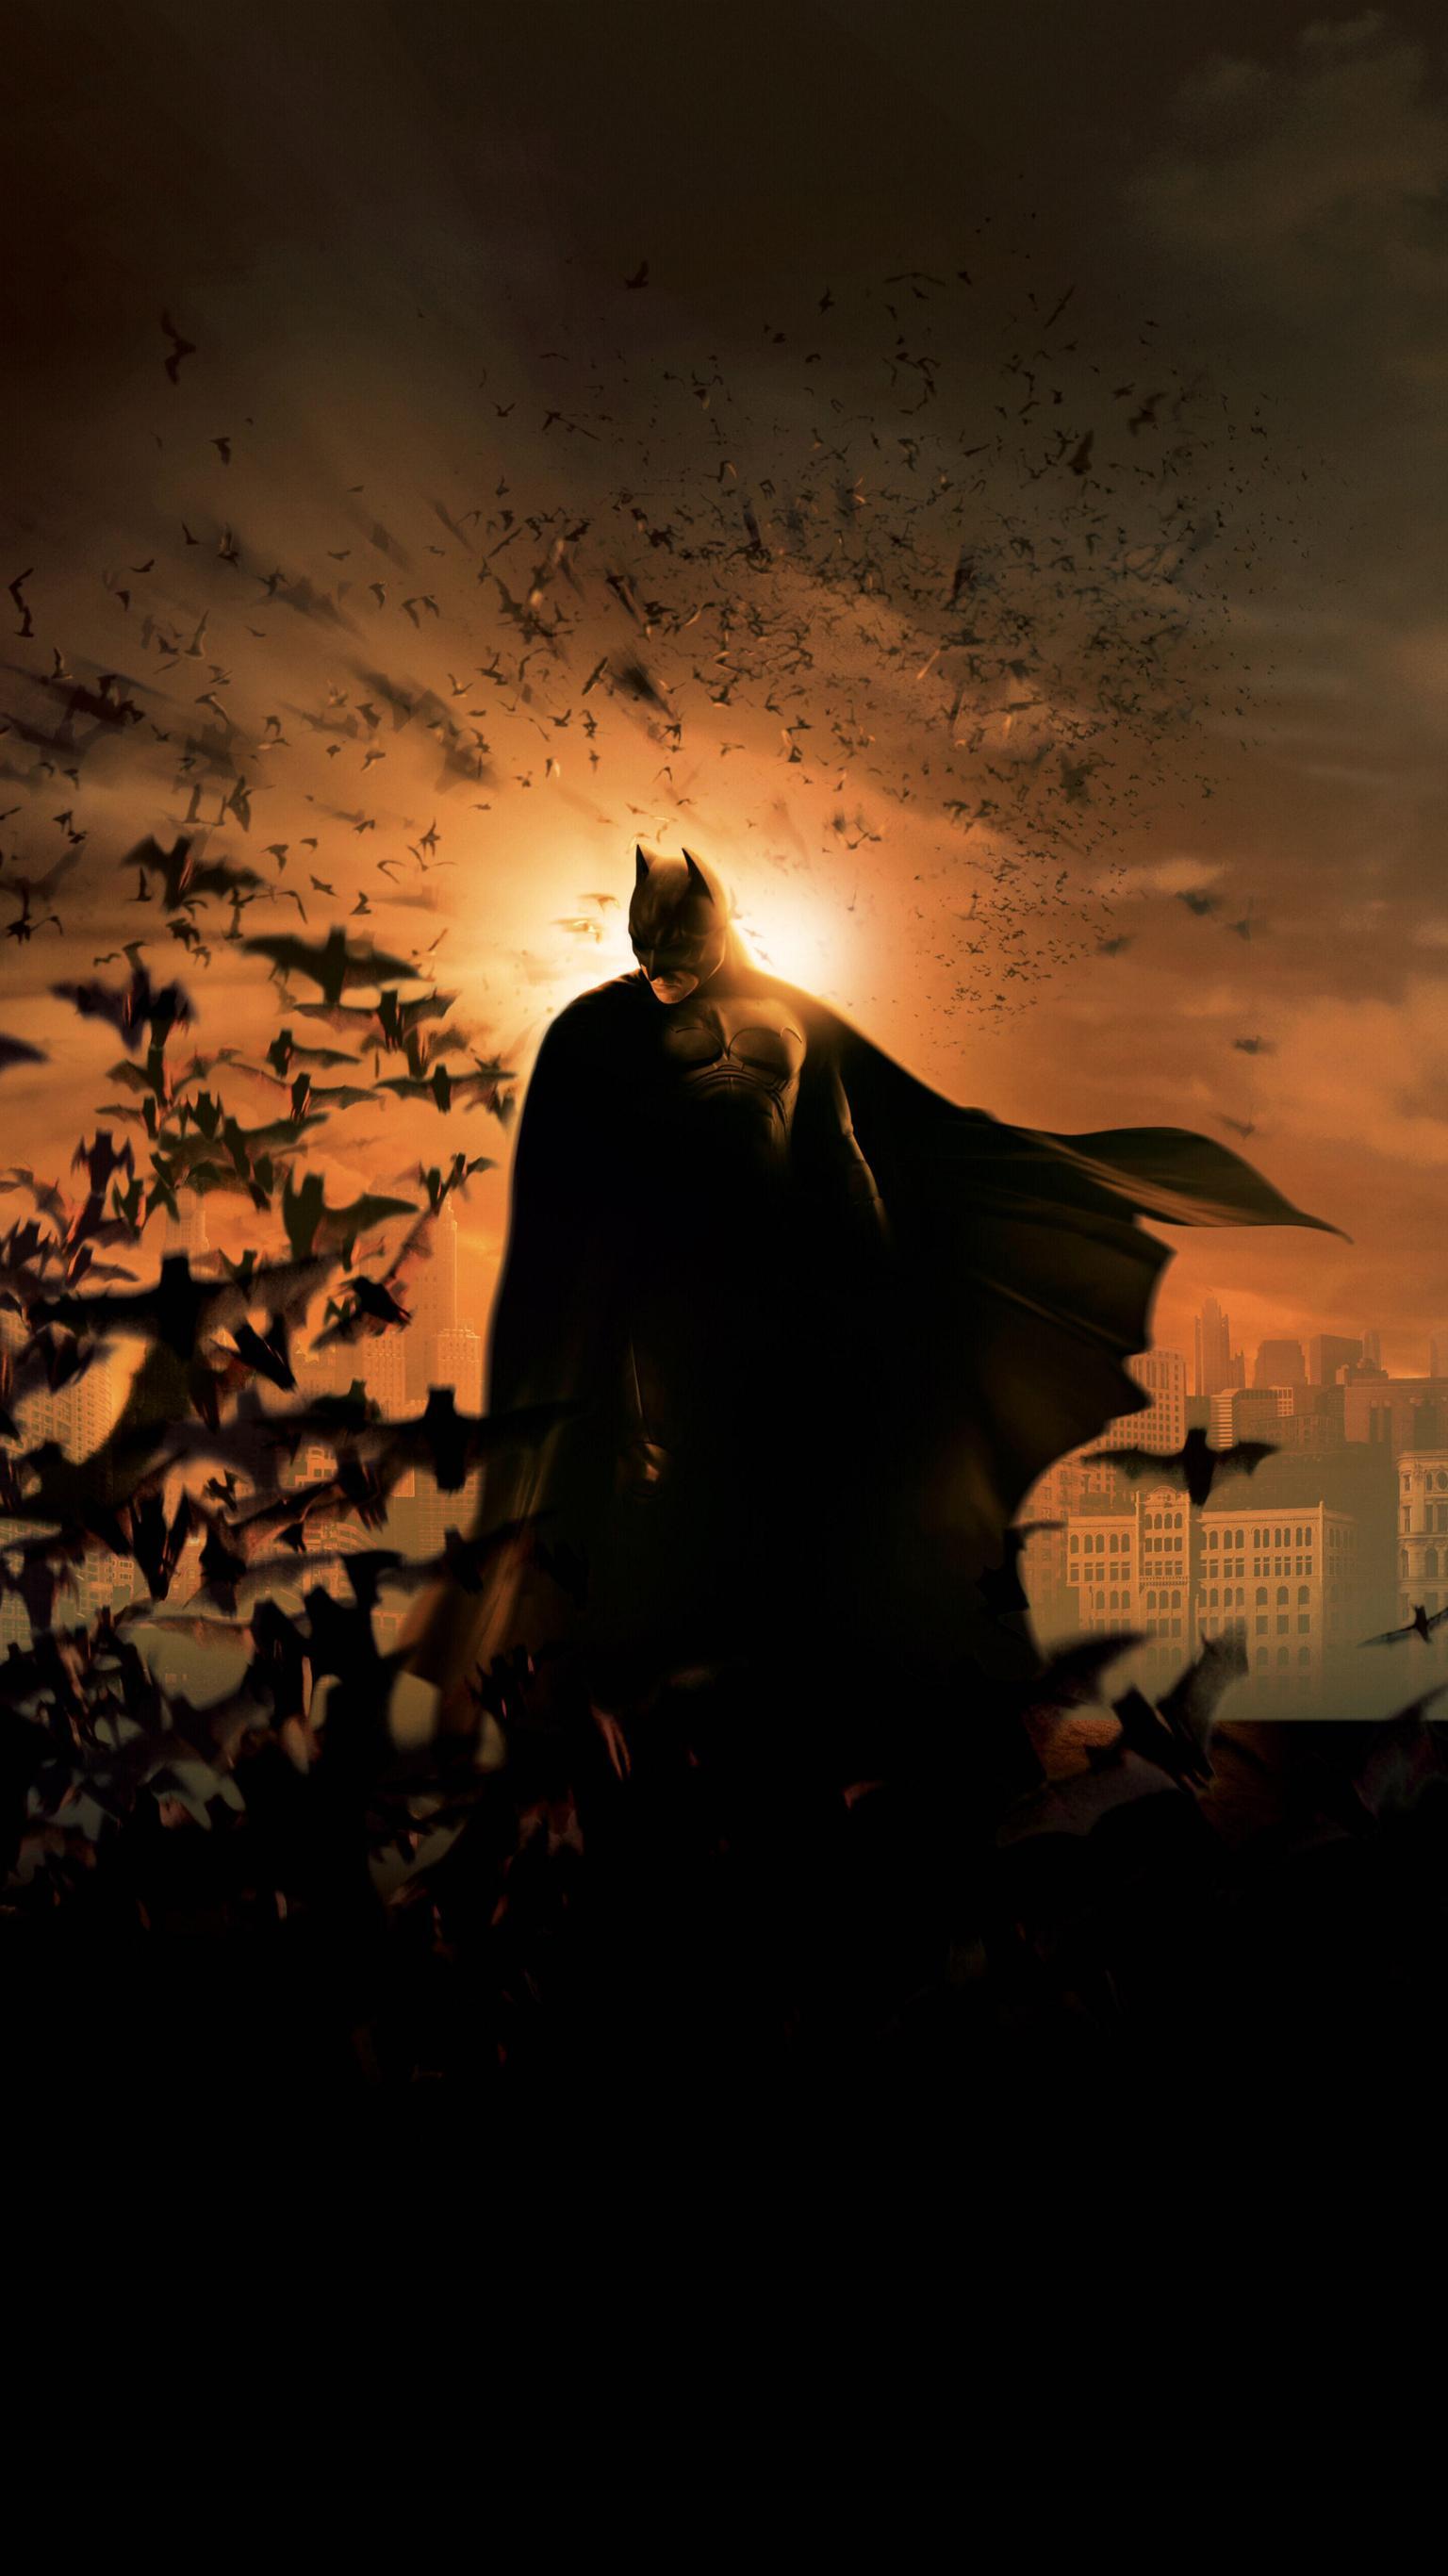 Batman Christian Bale iPhone Wallpaper - iPhone Wallpapers